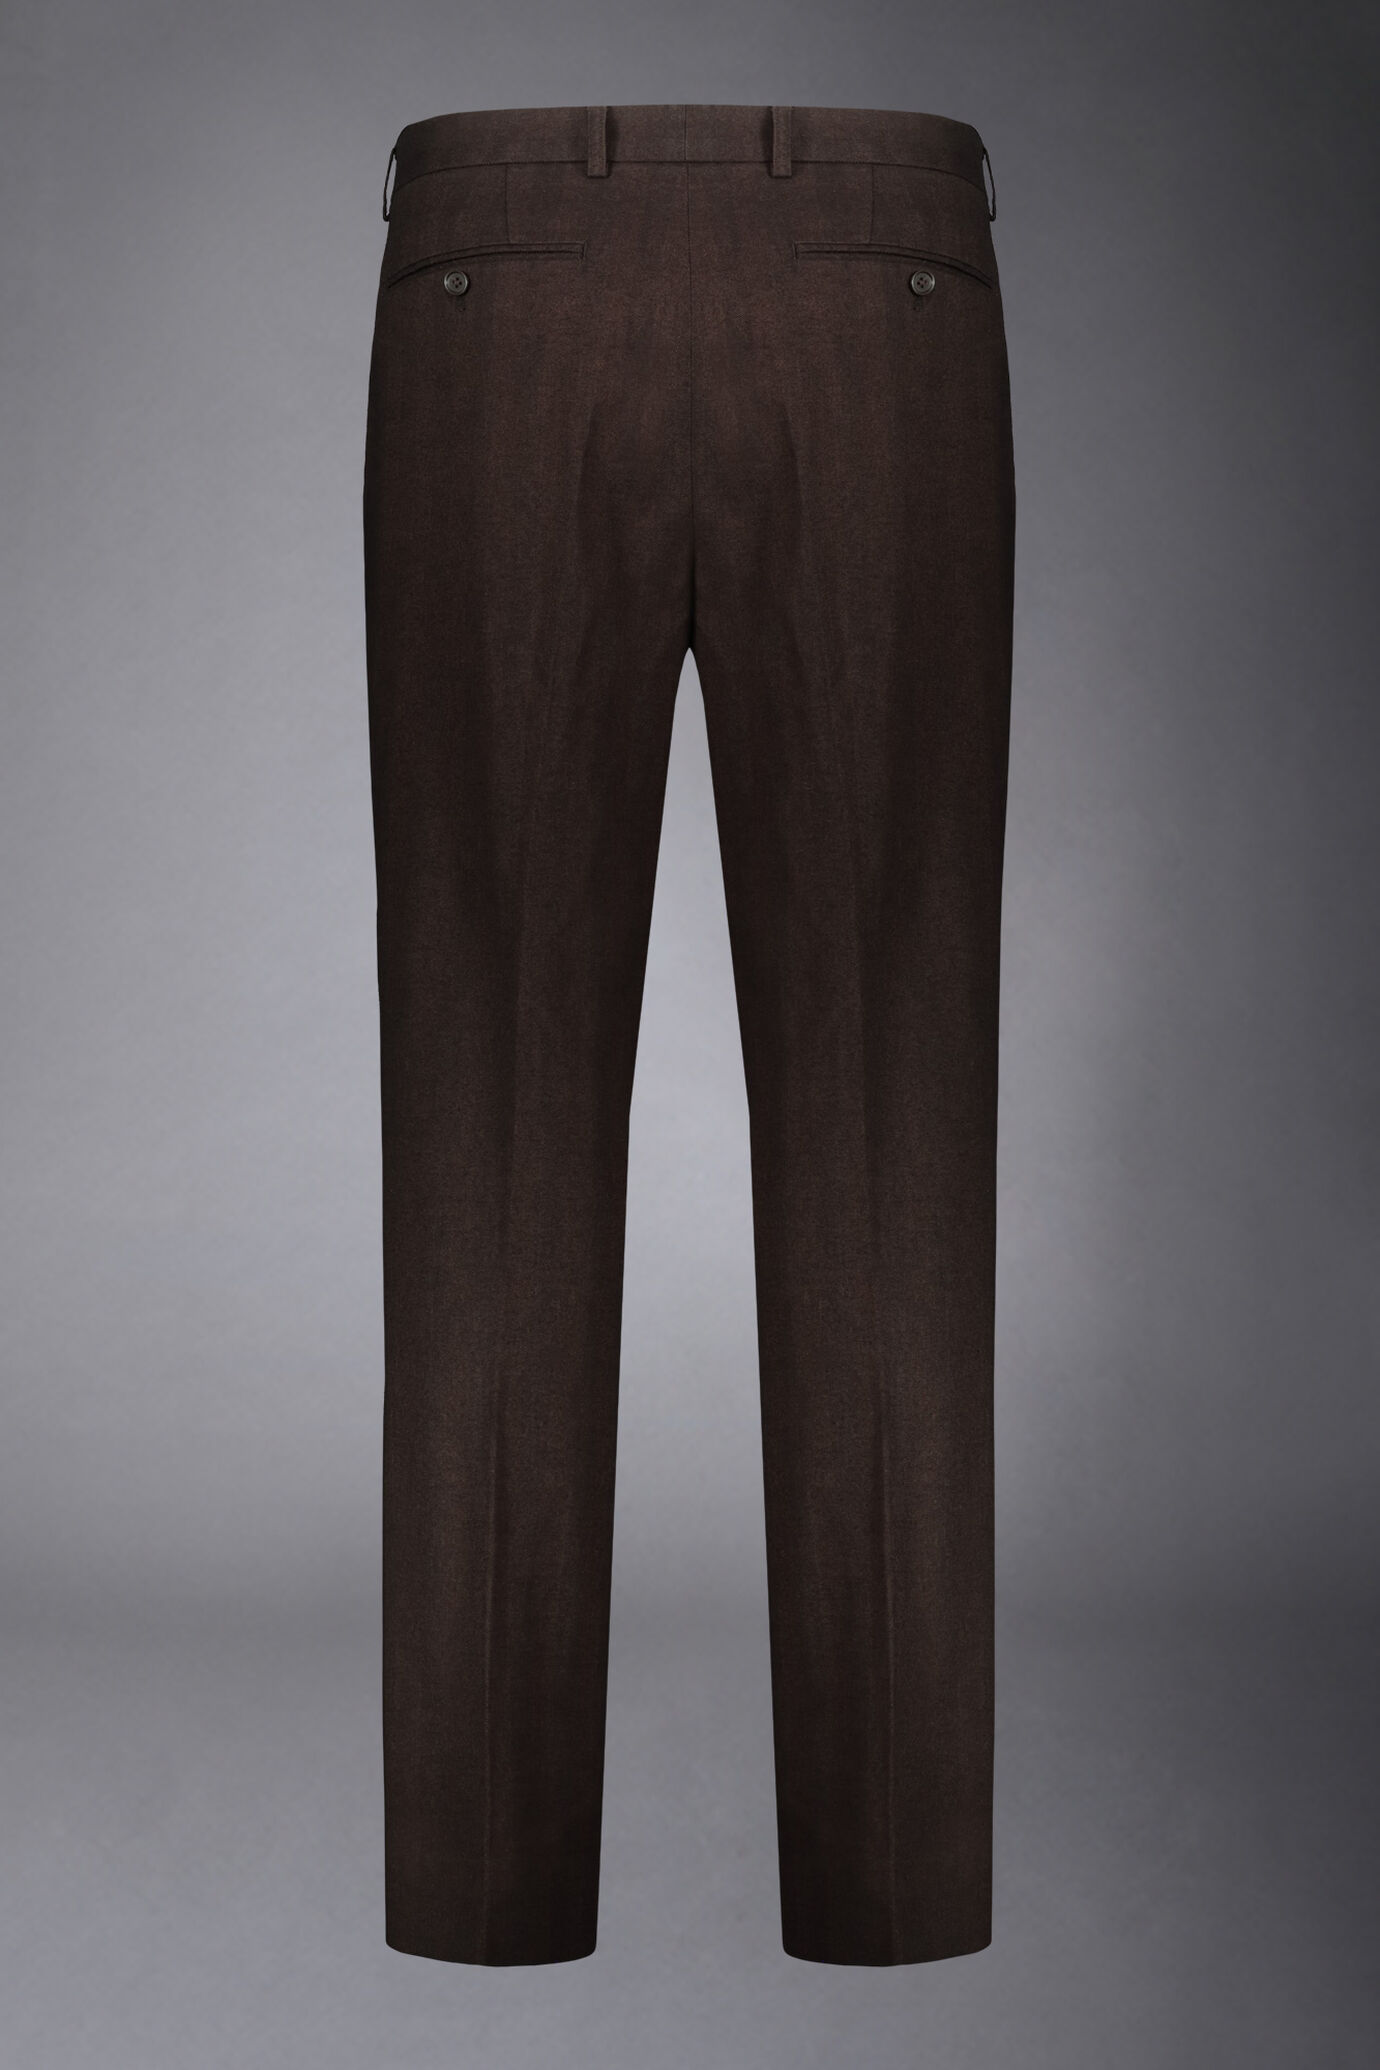 Pantalone uomo senza pinces in cotone stretch tessuto lavato disegno herringbone regular fit image number 5